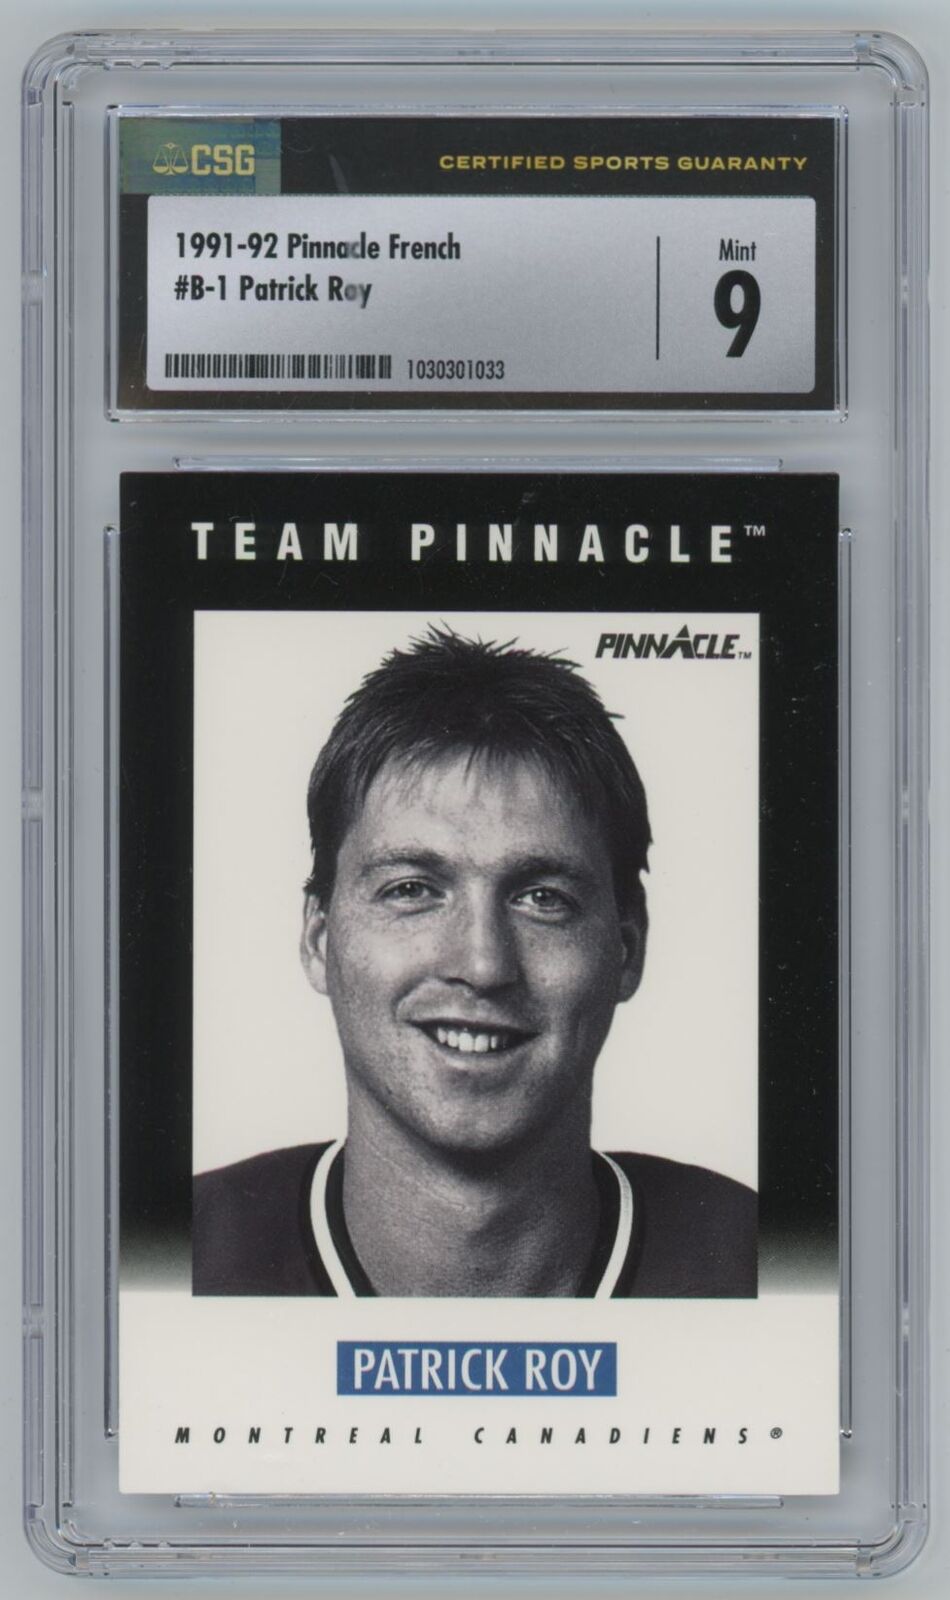 1991-92 Pinnacle French Patrick Roy CSG MINT 9 . Montreal Canadiens #B-1